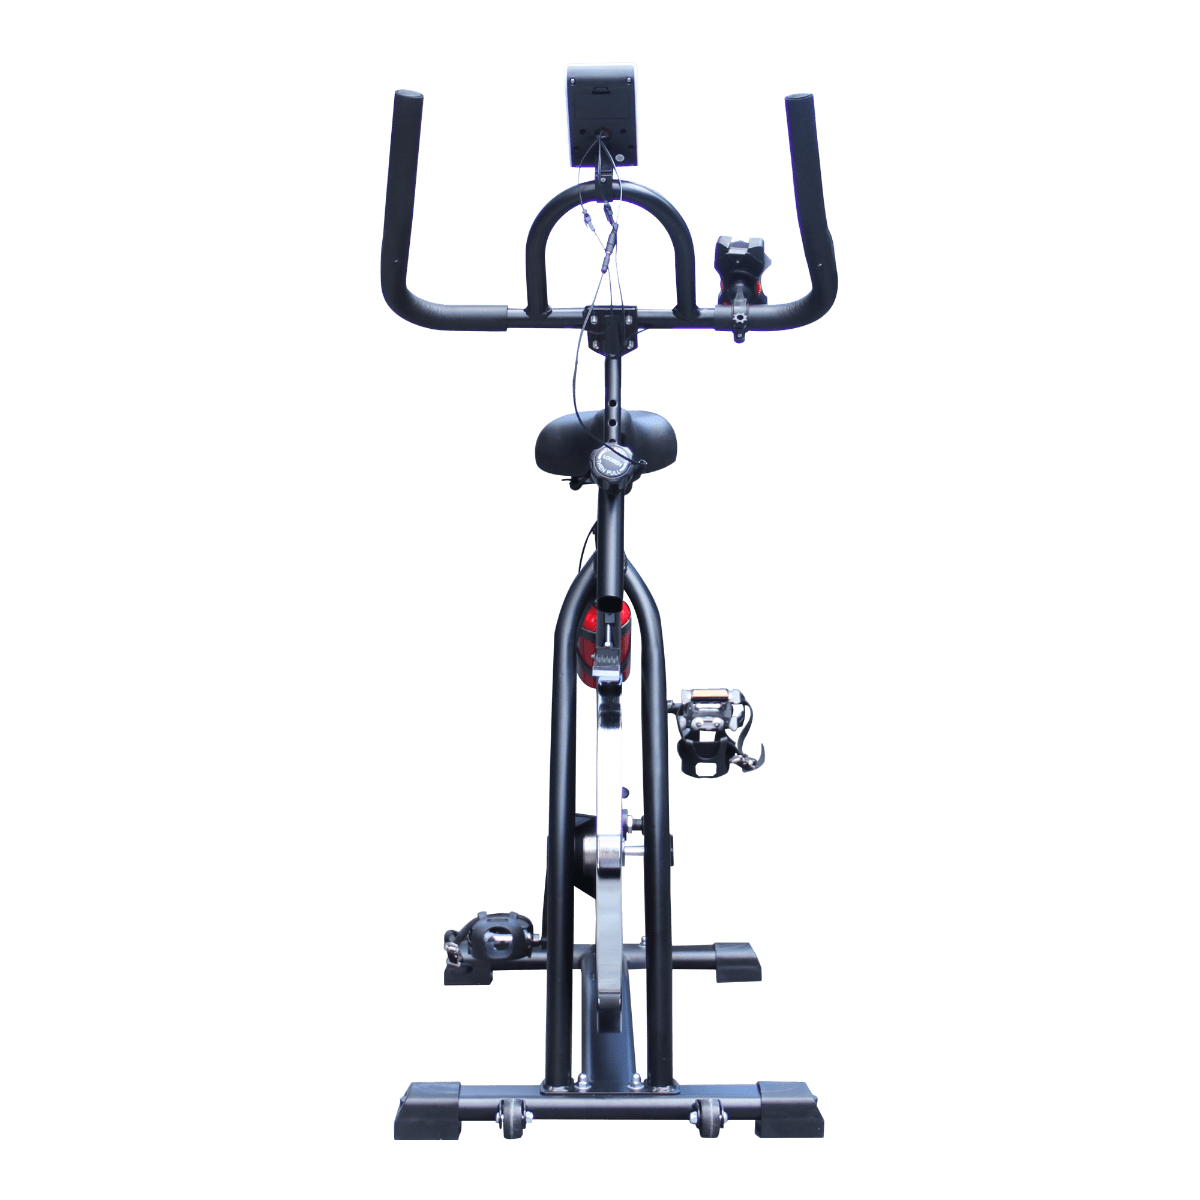 Workoutwiz Spin Bike Exercise 11KG Flywheel Fitness Commercial Gym w/ Phone Holder